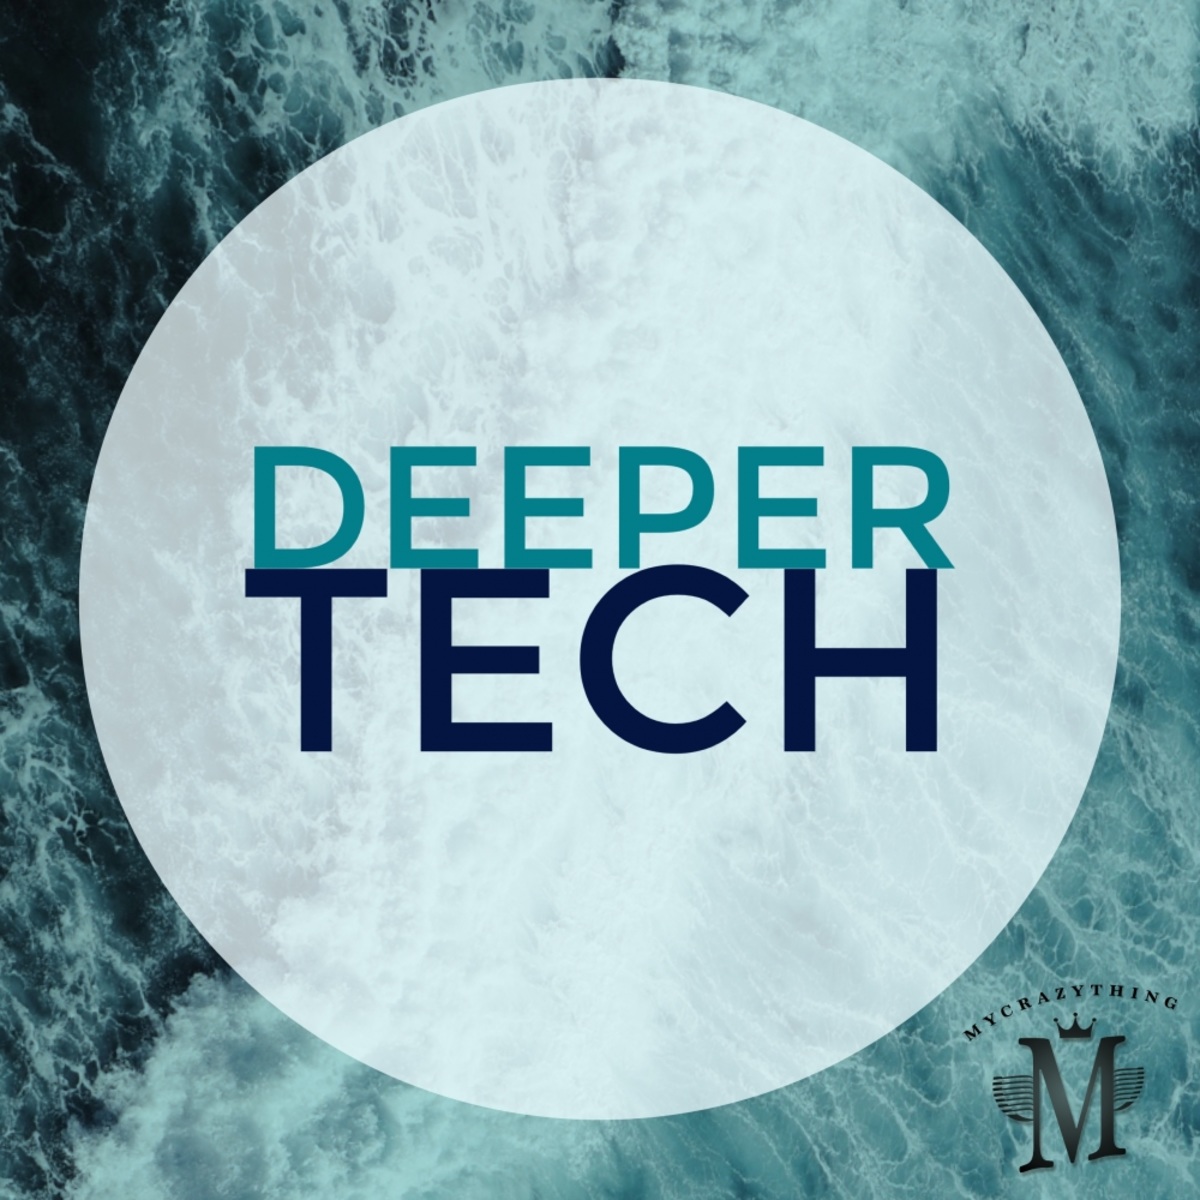 VA - Deeper Tech / Mycrazything Records